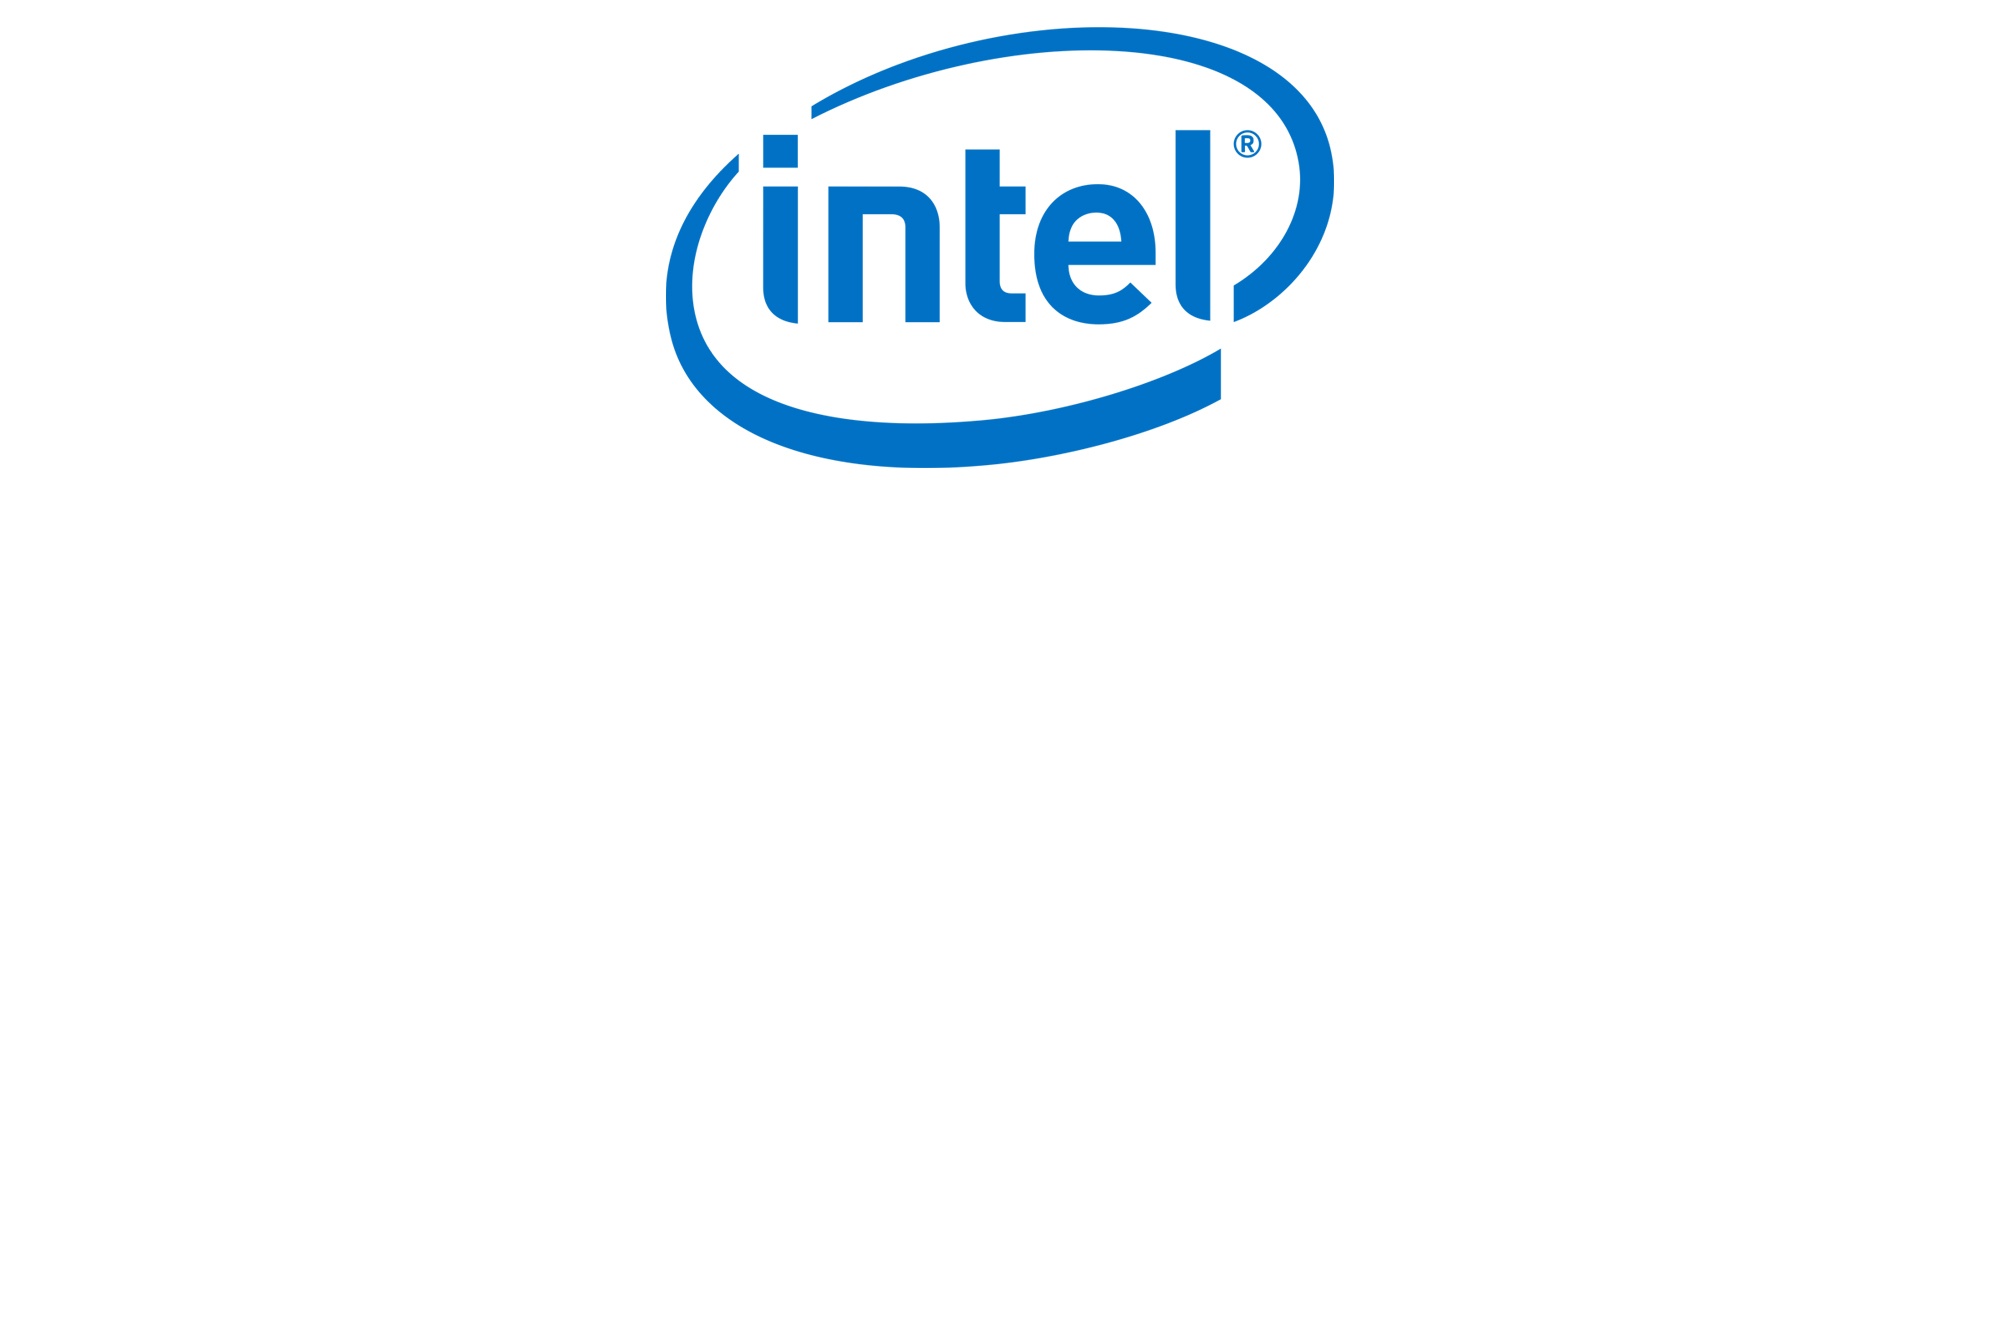 Intel com. Intel Core 2 Duo лого. Интел без фона. Intel на прозрачном фоне. Intel прозрачный логотип.